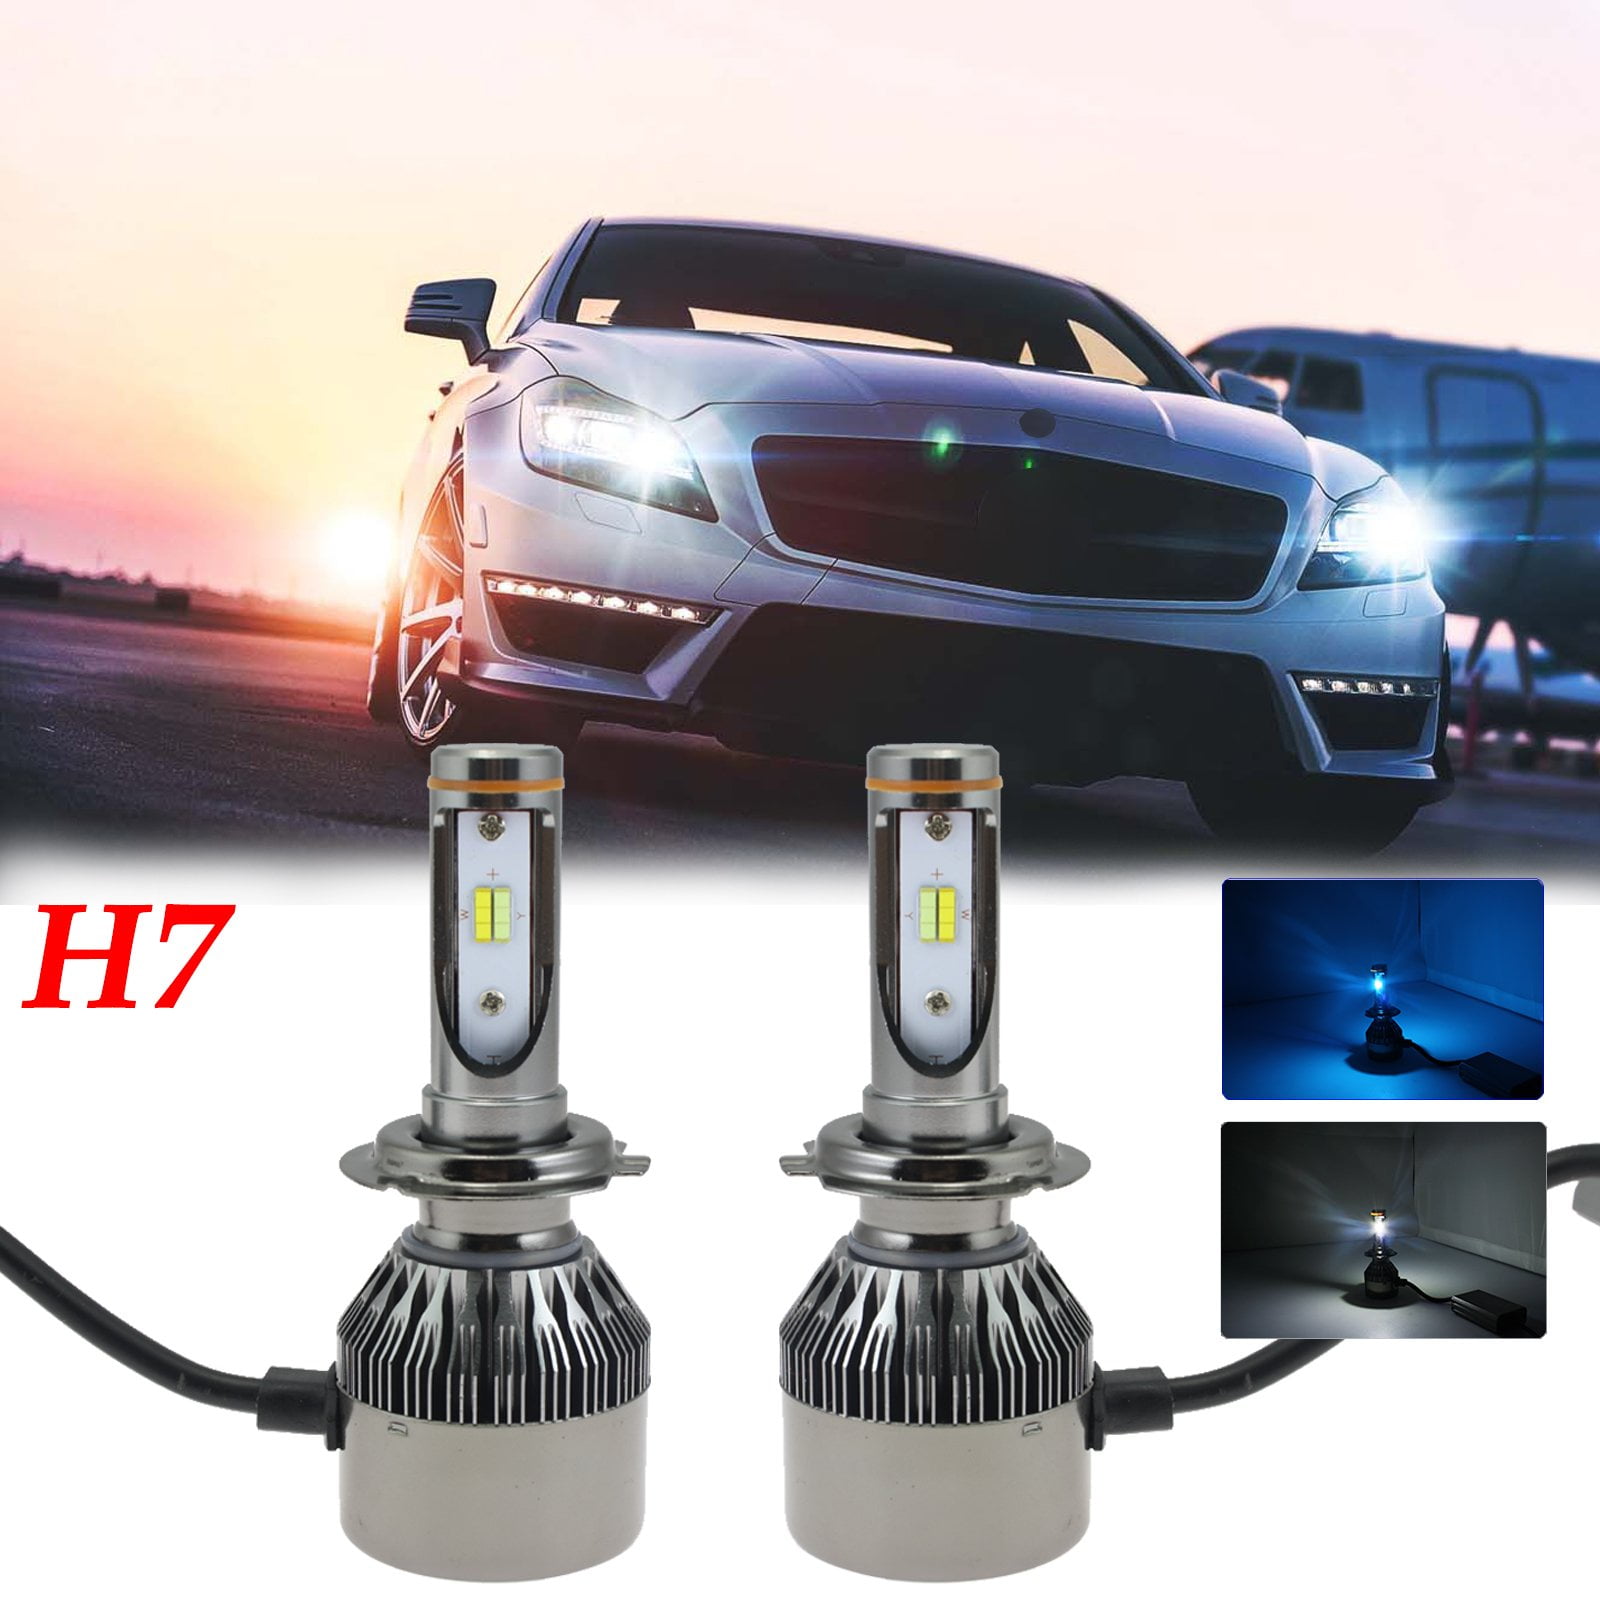 Car H7 Bulb Set Headlight Bulbs Xenon White Light For Mercedes Vito W639 111 CDi